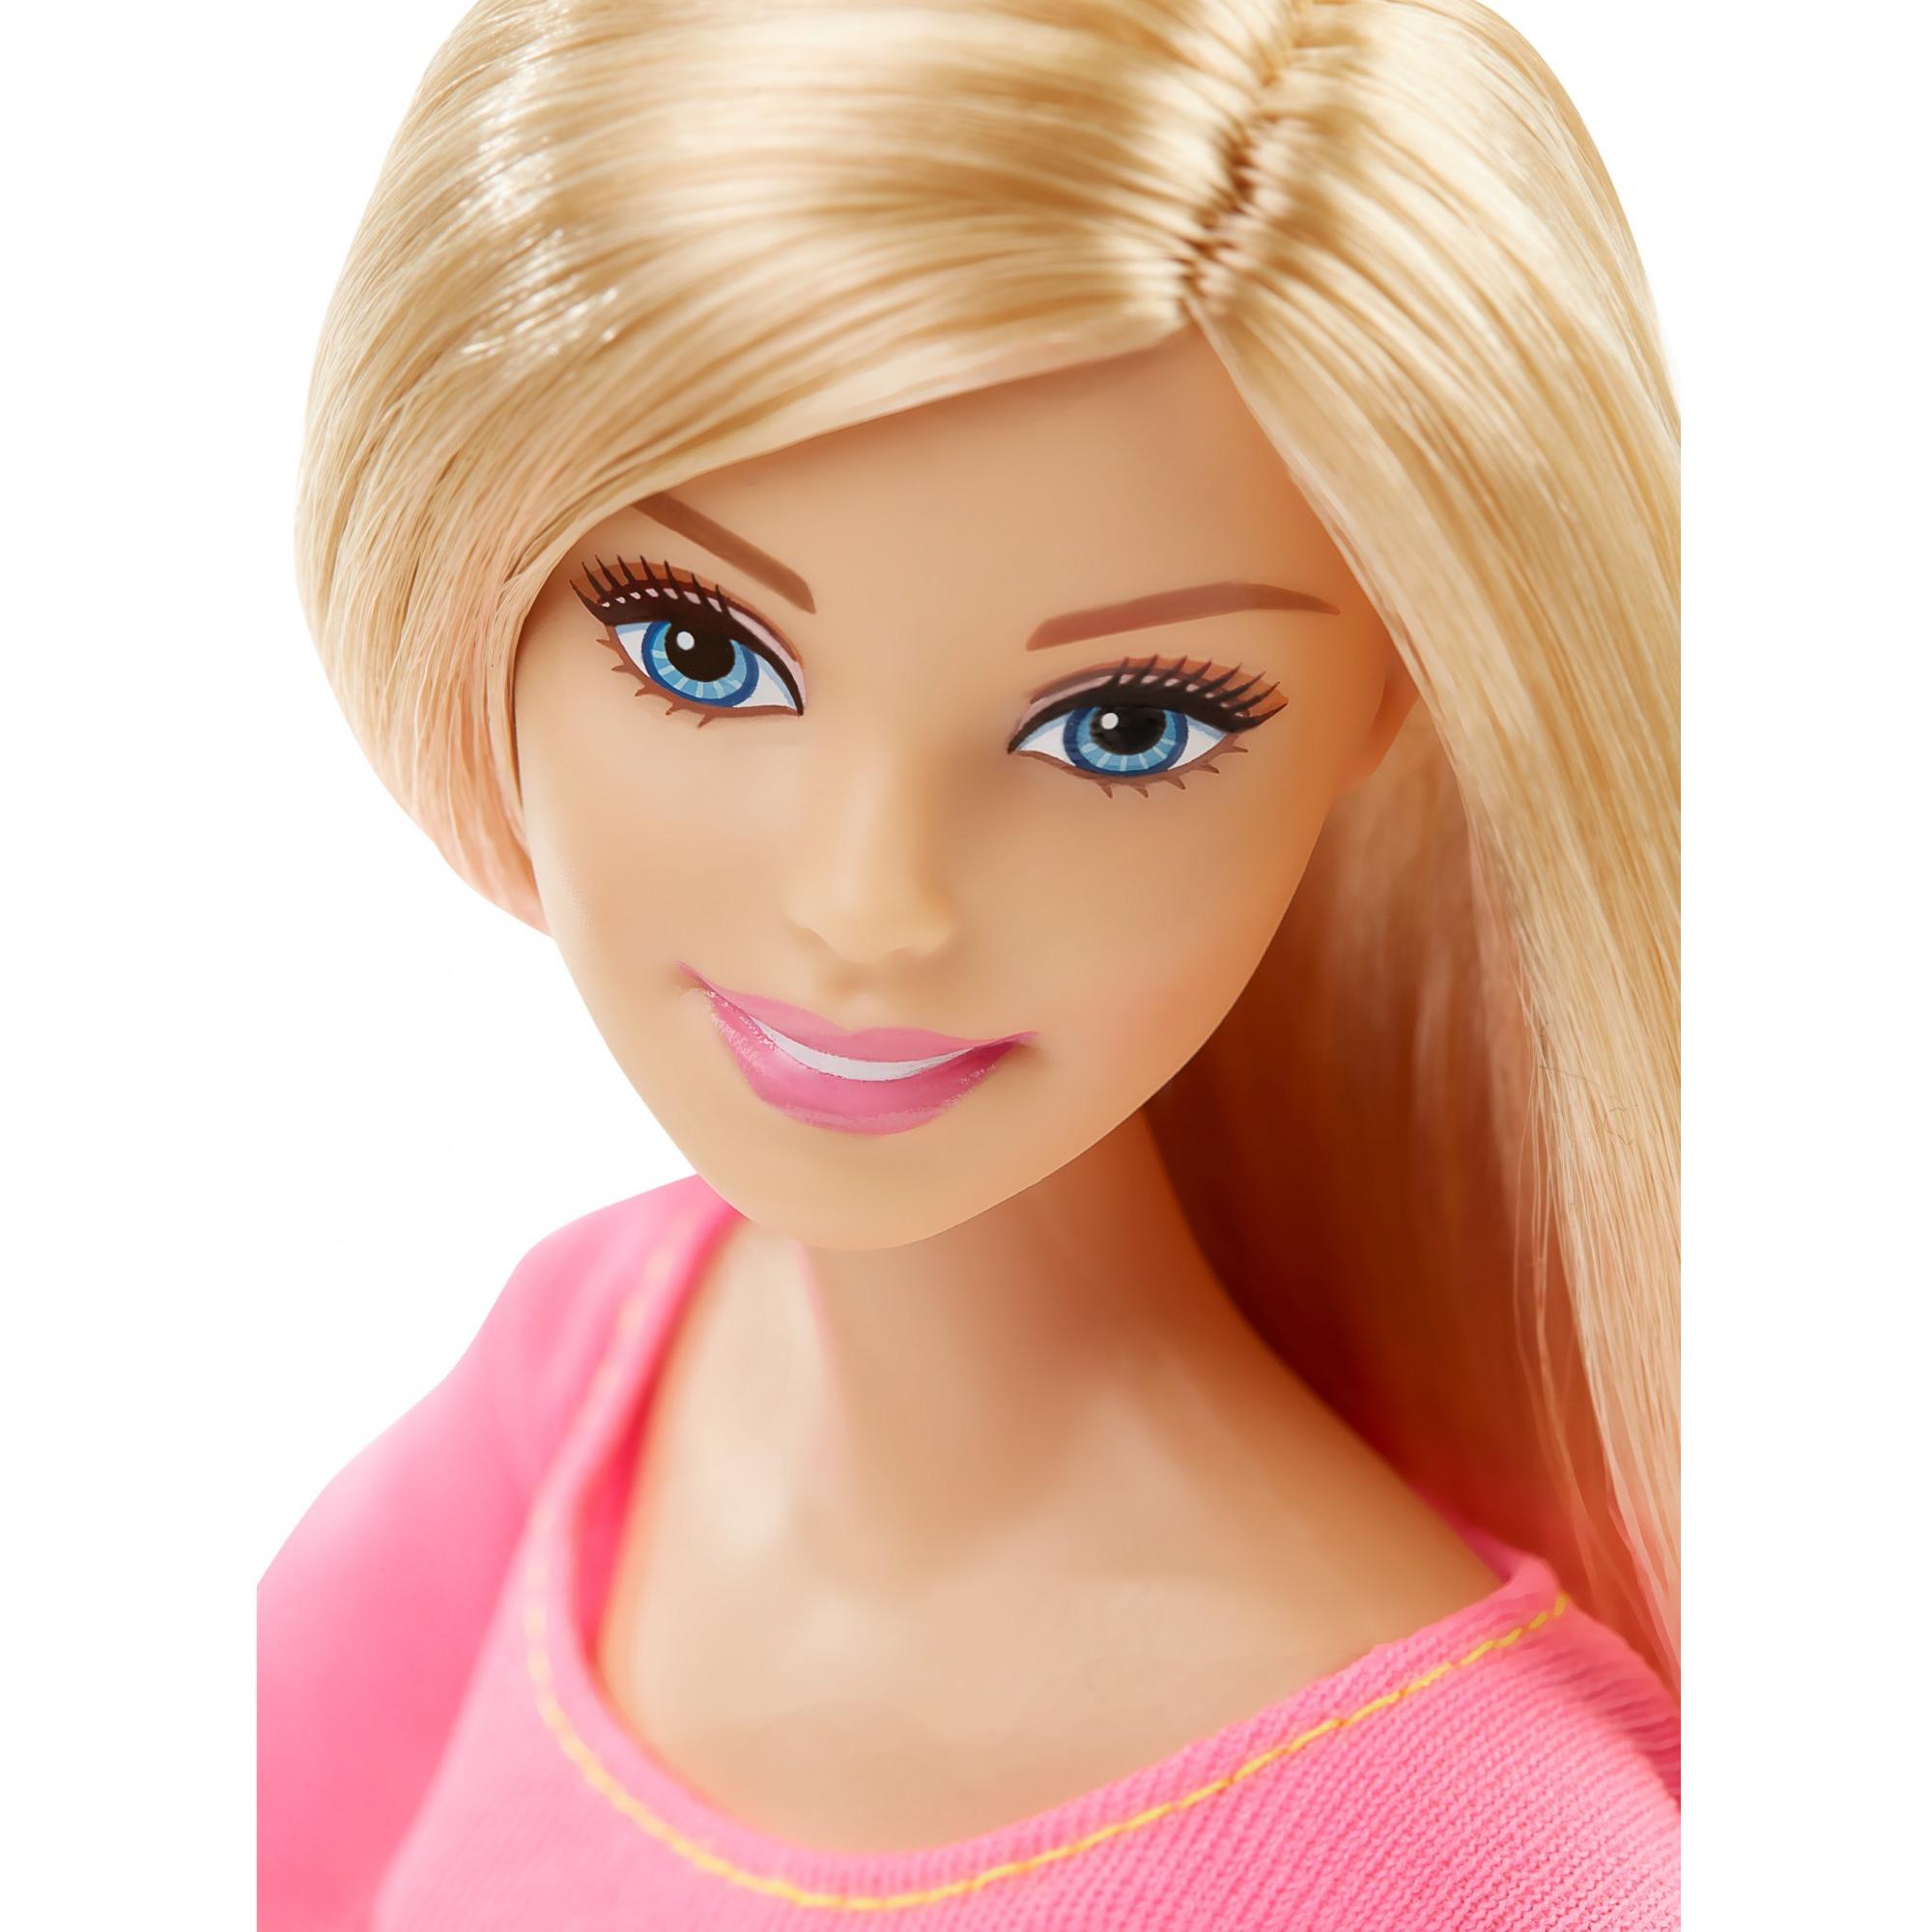 Barbie Endless Moves Doll, Pink Top - Walmart.com